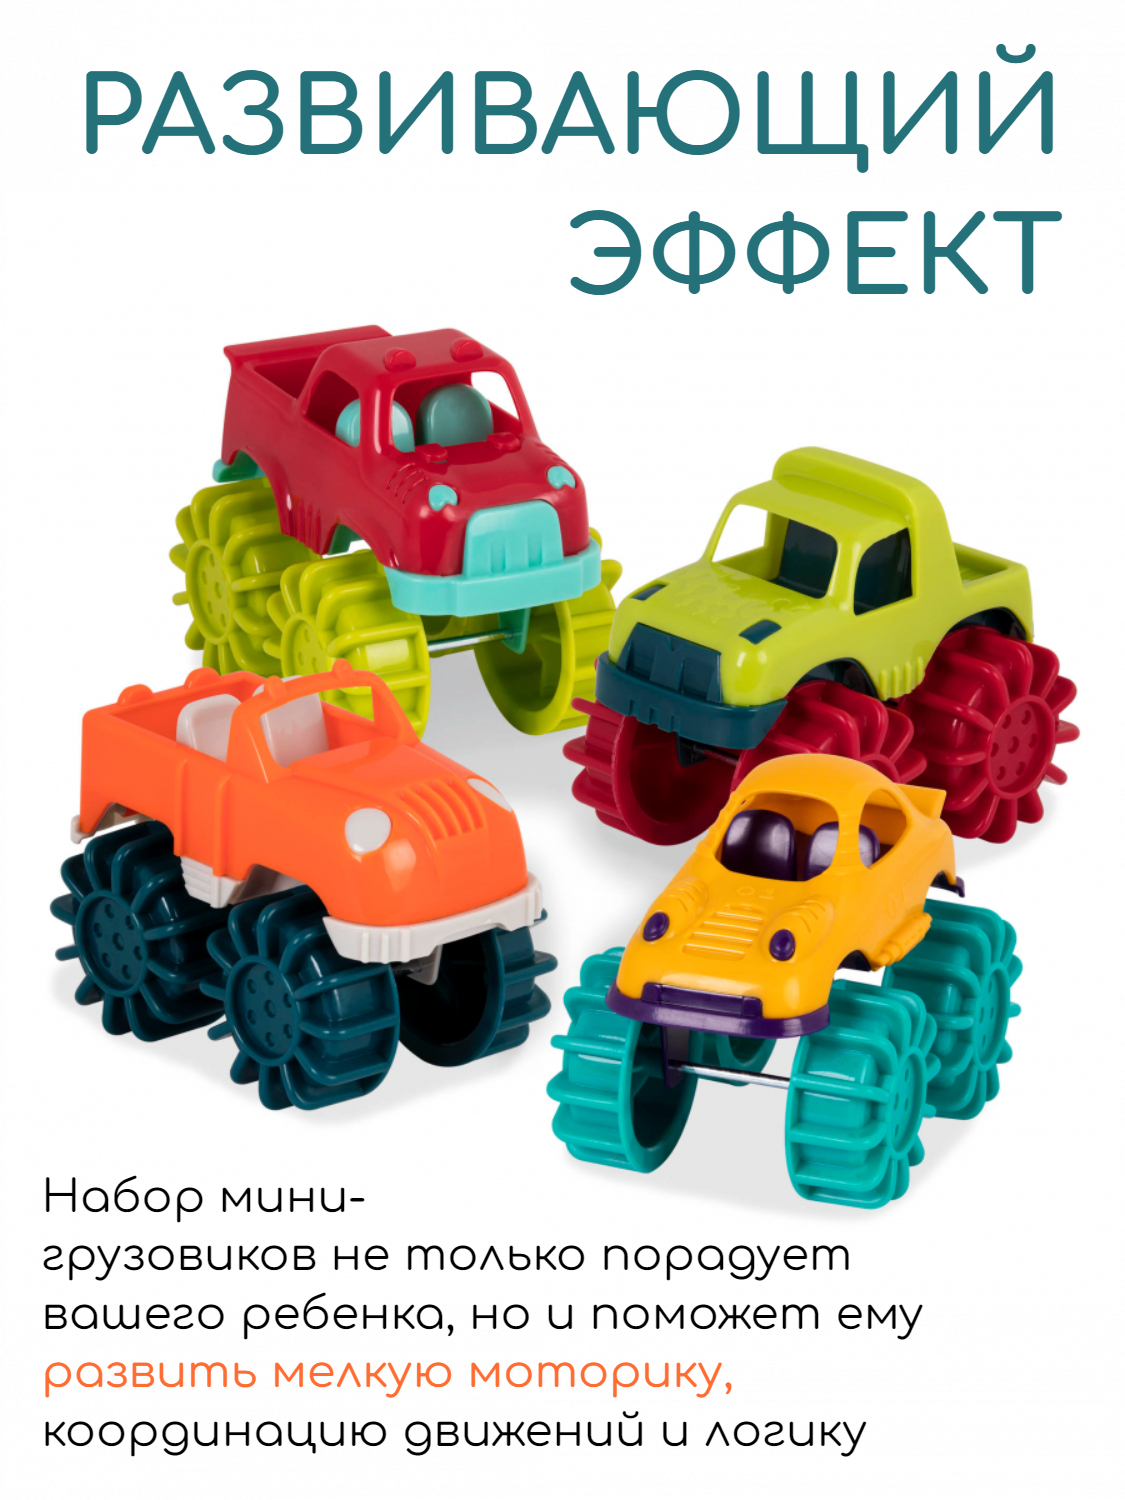 Набор мини-грузовичков Battat 68717 мини спойлер для авто 17×3 5 см